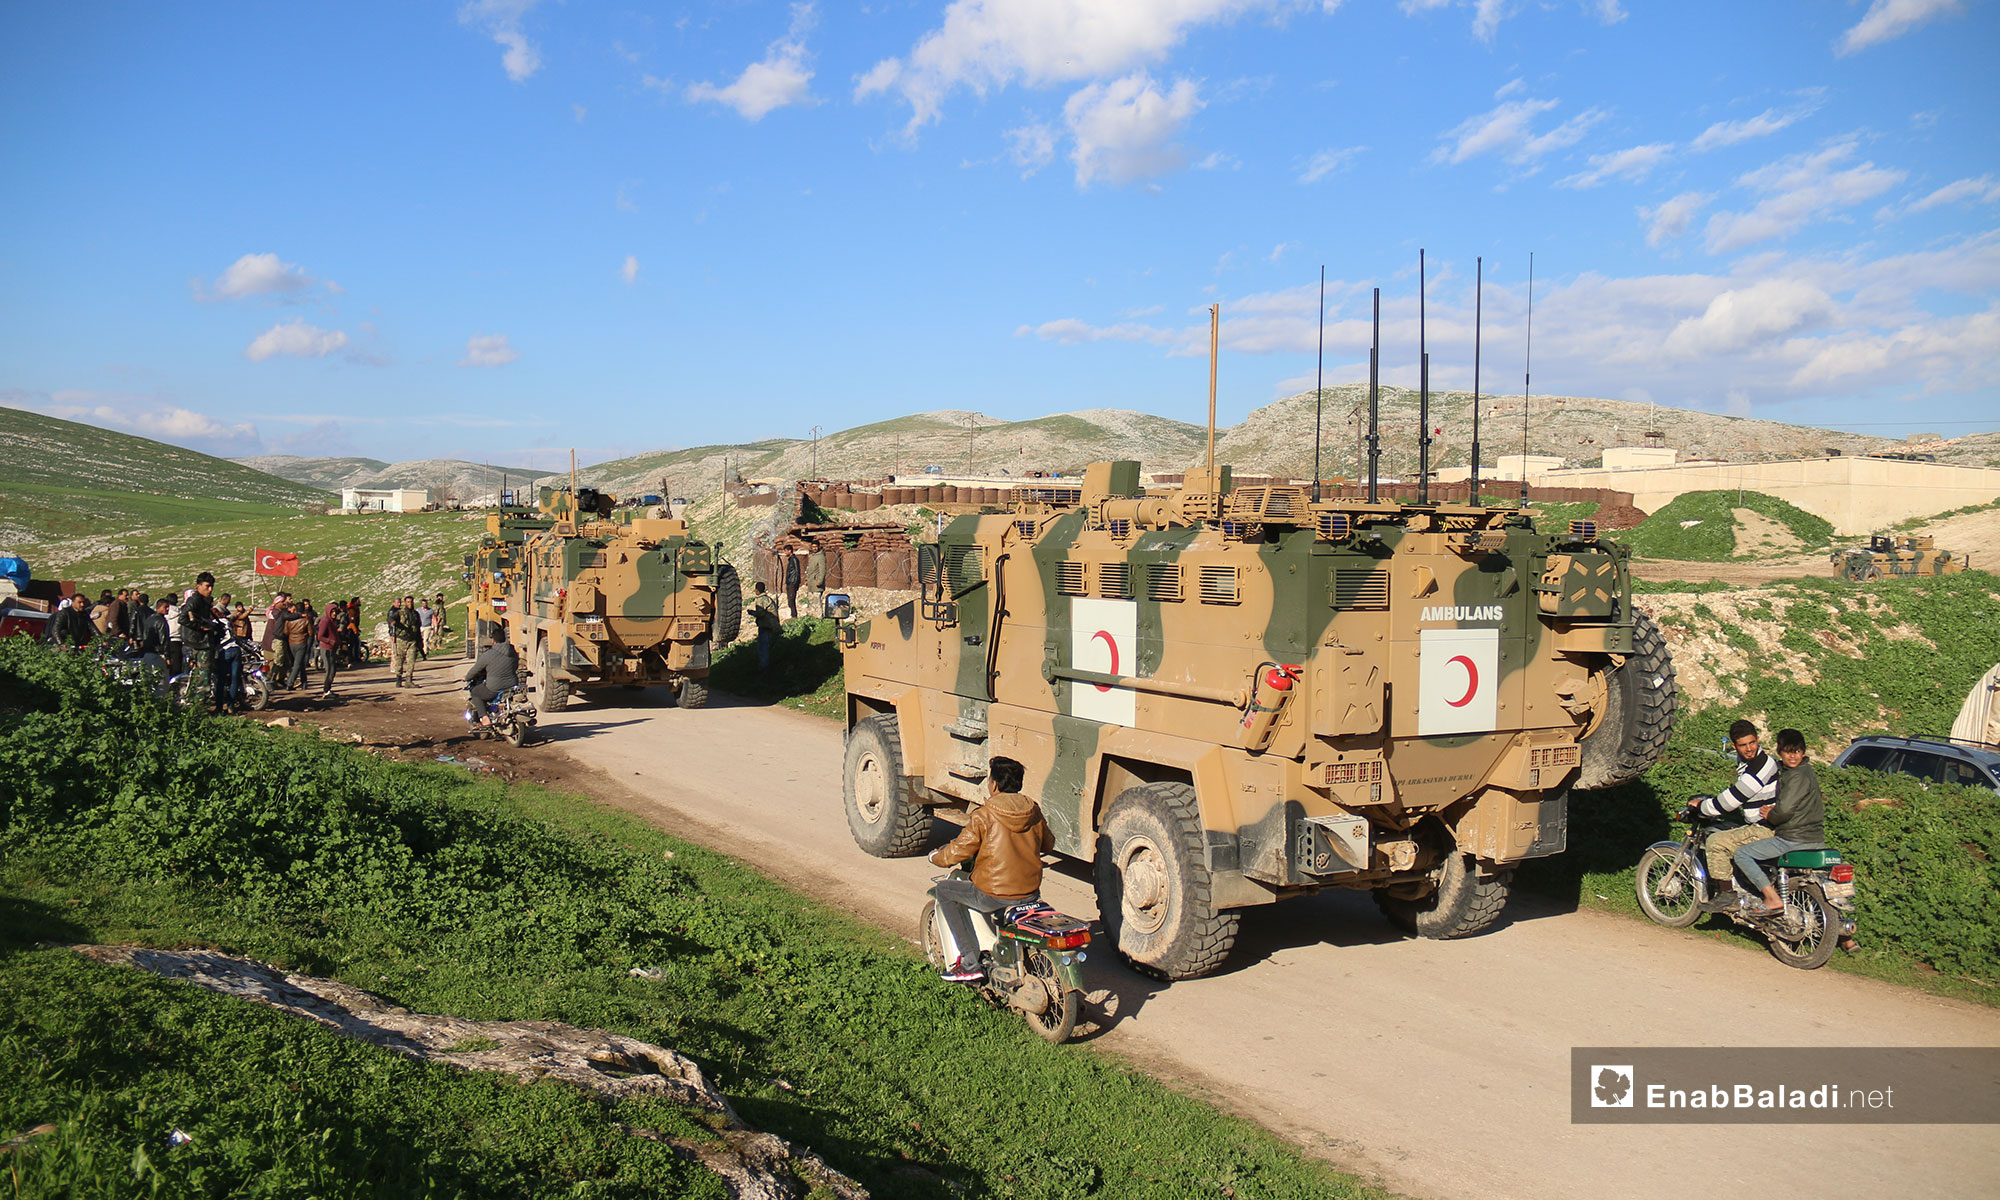 Turkish Army Patrol enters the demilitarized zone in rural Hama – March 18, 2019 (Enab Baladi)